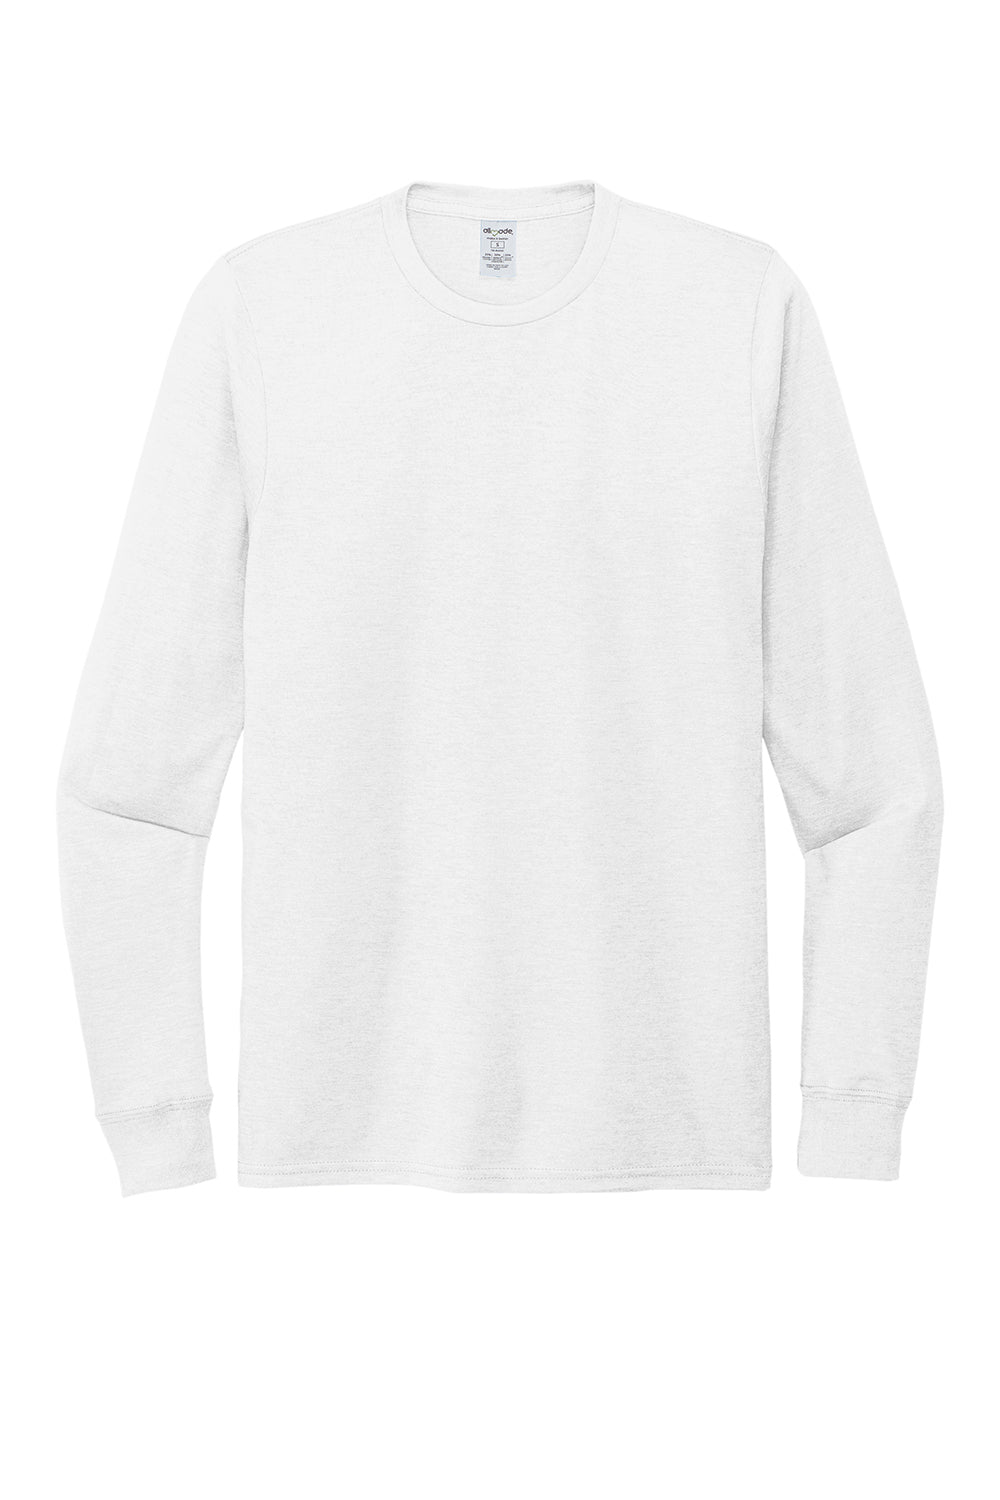 Allmade AL6004 Mens Long Sleeve Crewneck T-Shirt Bright White Flat Front